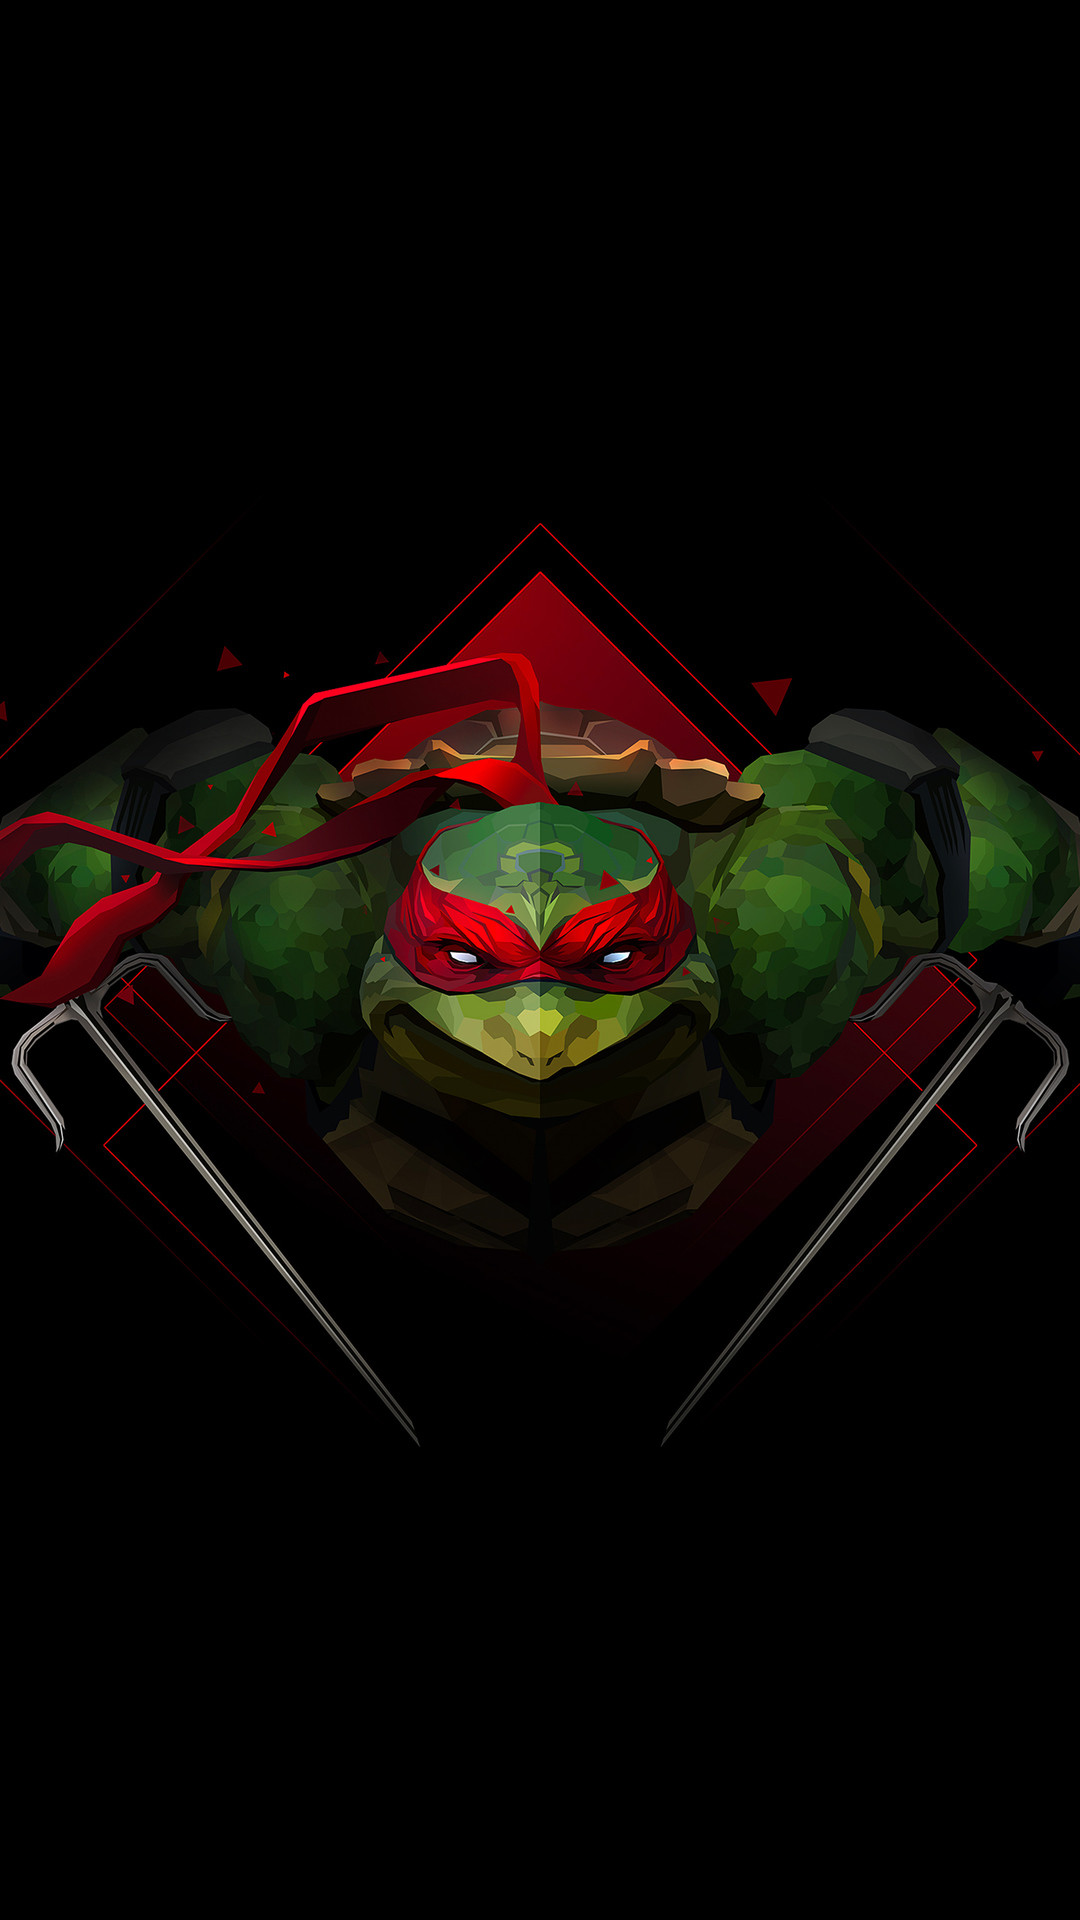 Ninja Turtle iPhone Wallpaper (75+ images)